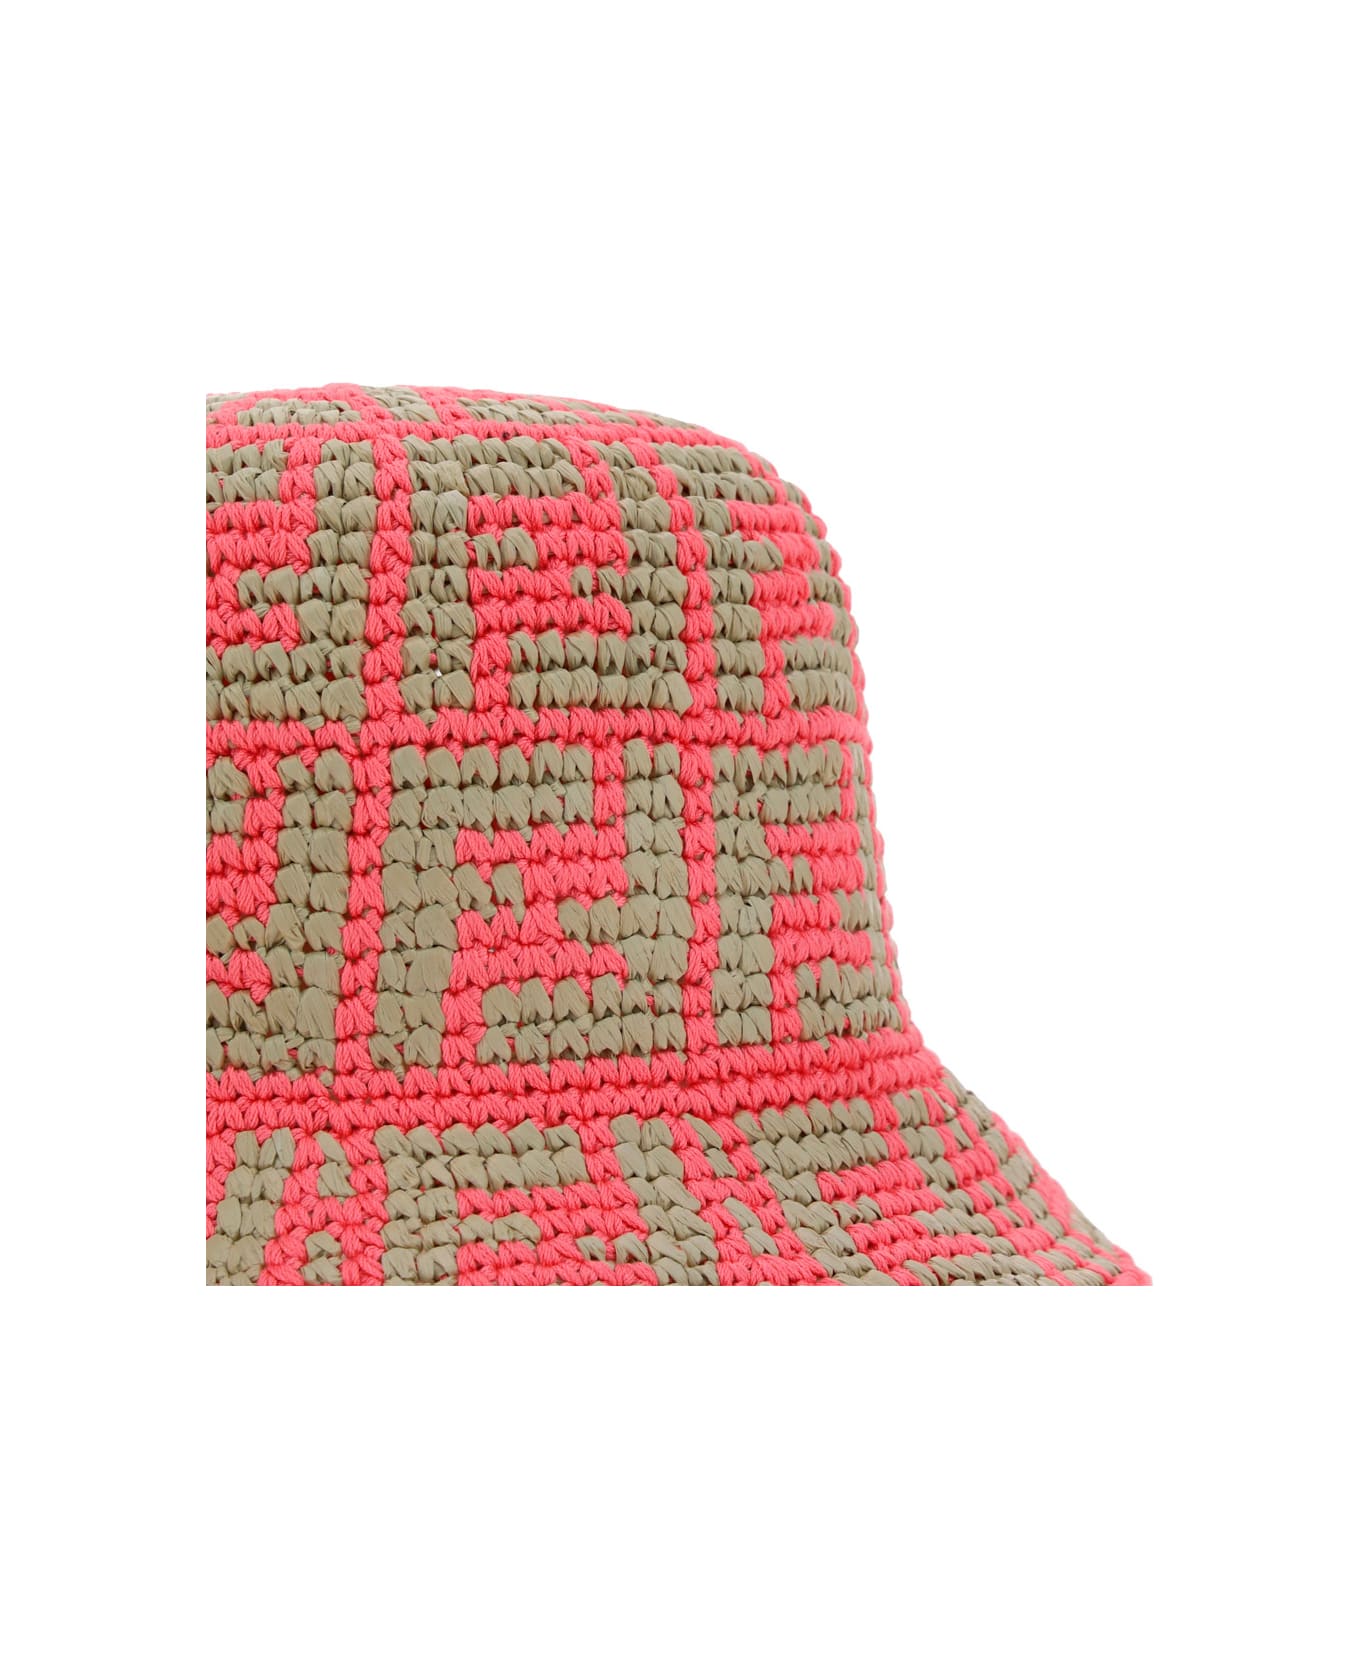 Fendi Raffia Ff Bucket Hat - Pink Dalia 帽子